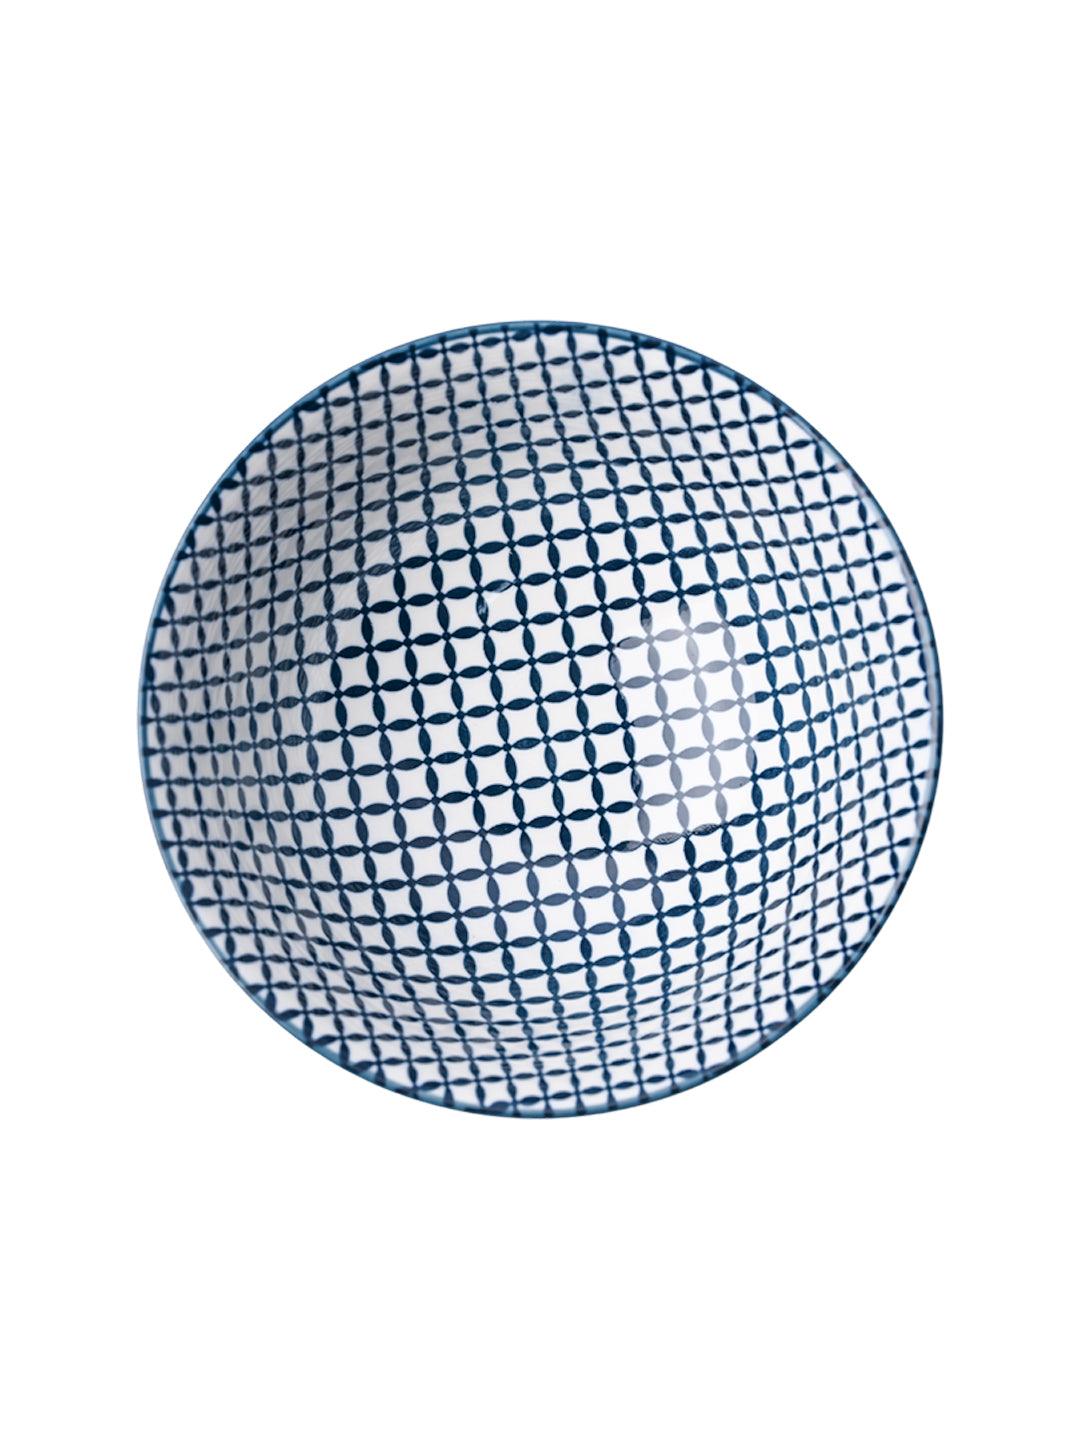 Geomatry Bowl Set Of 2 (650Ml) - MARKET99